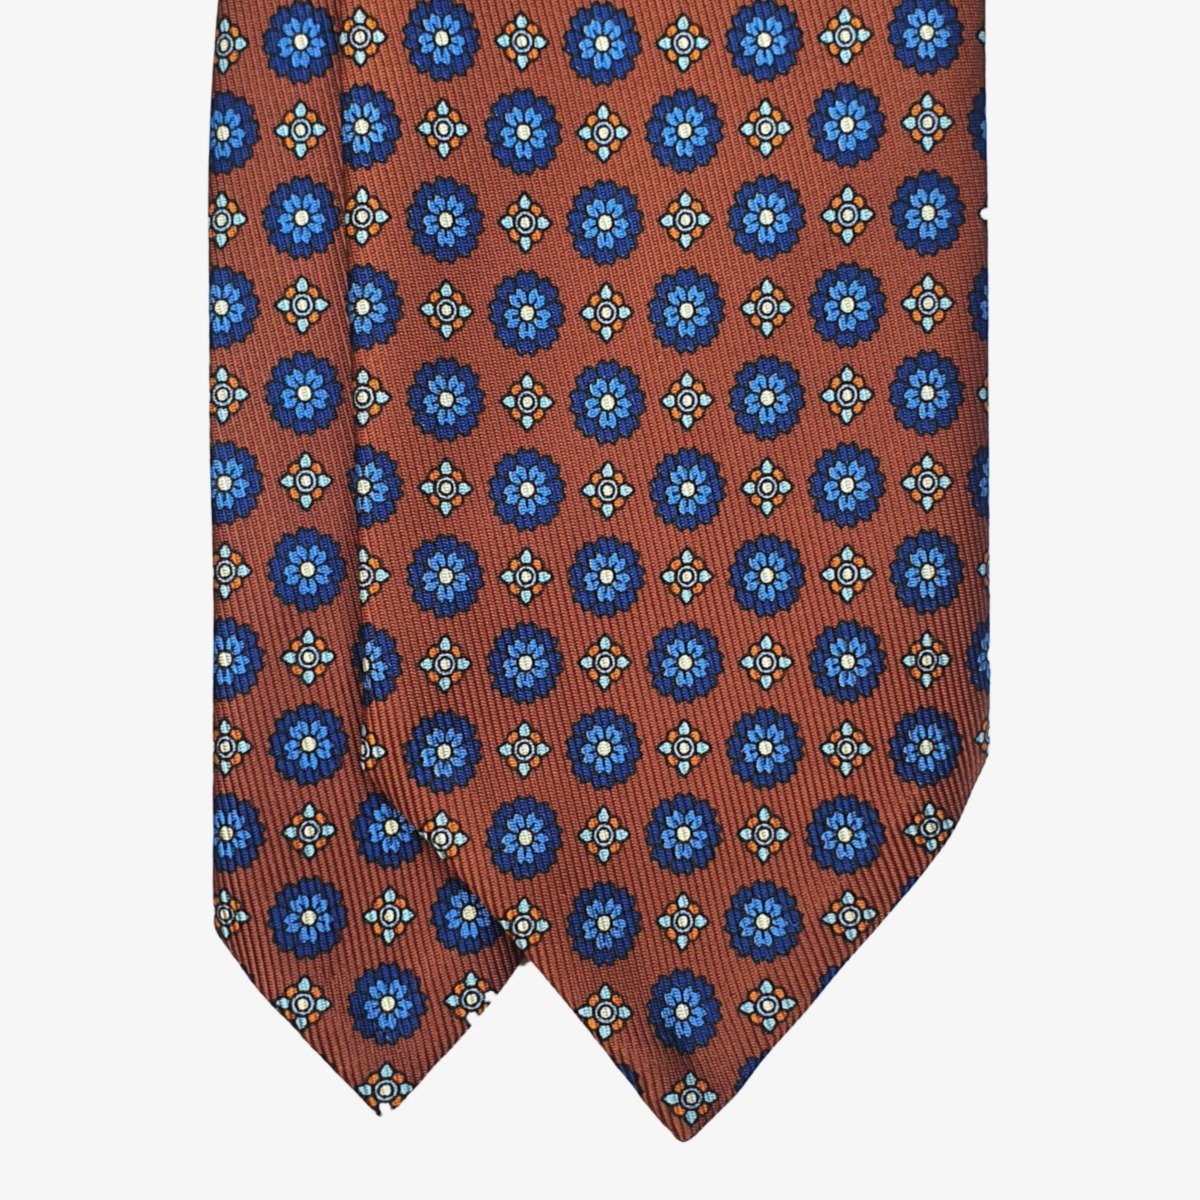 Shibumi Firenze 7-fold brown silk tie with blue flowers